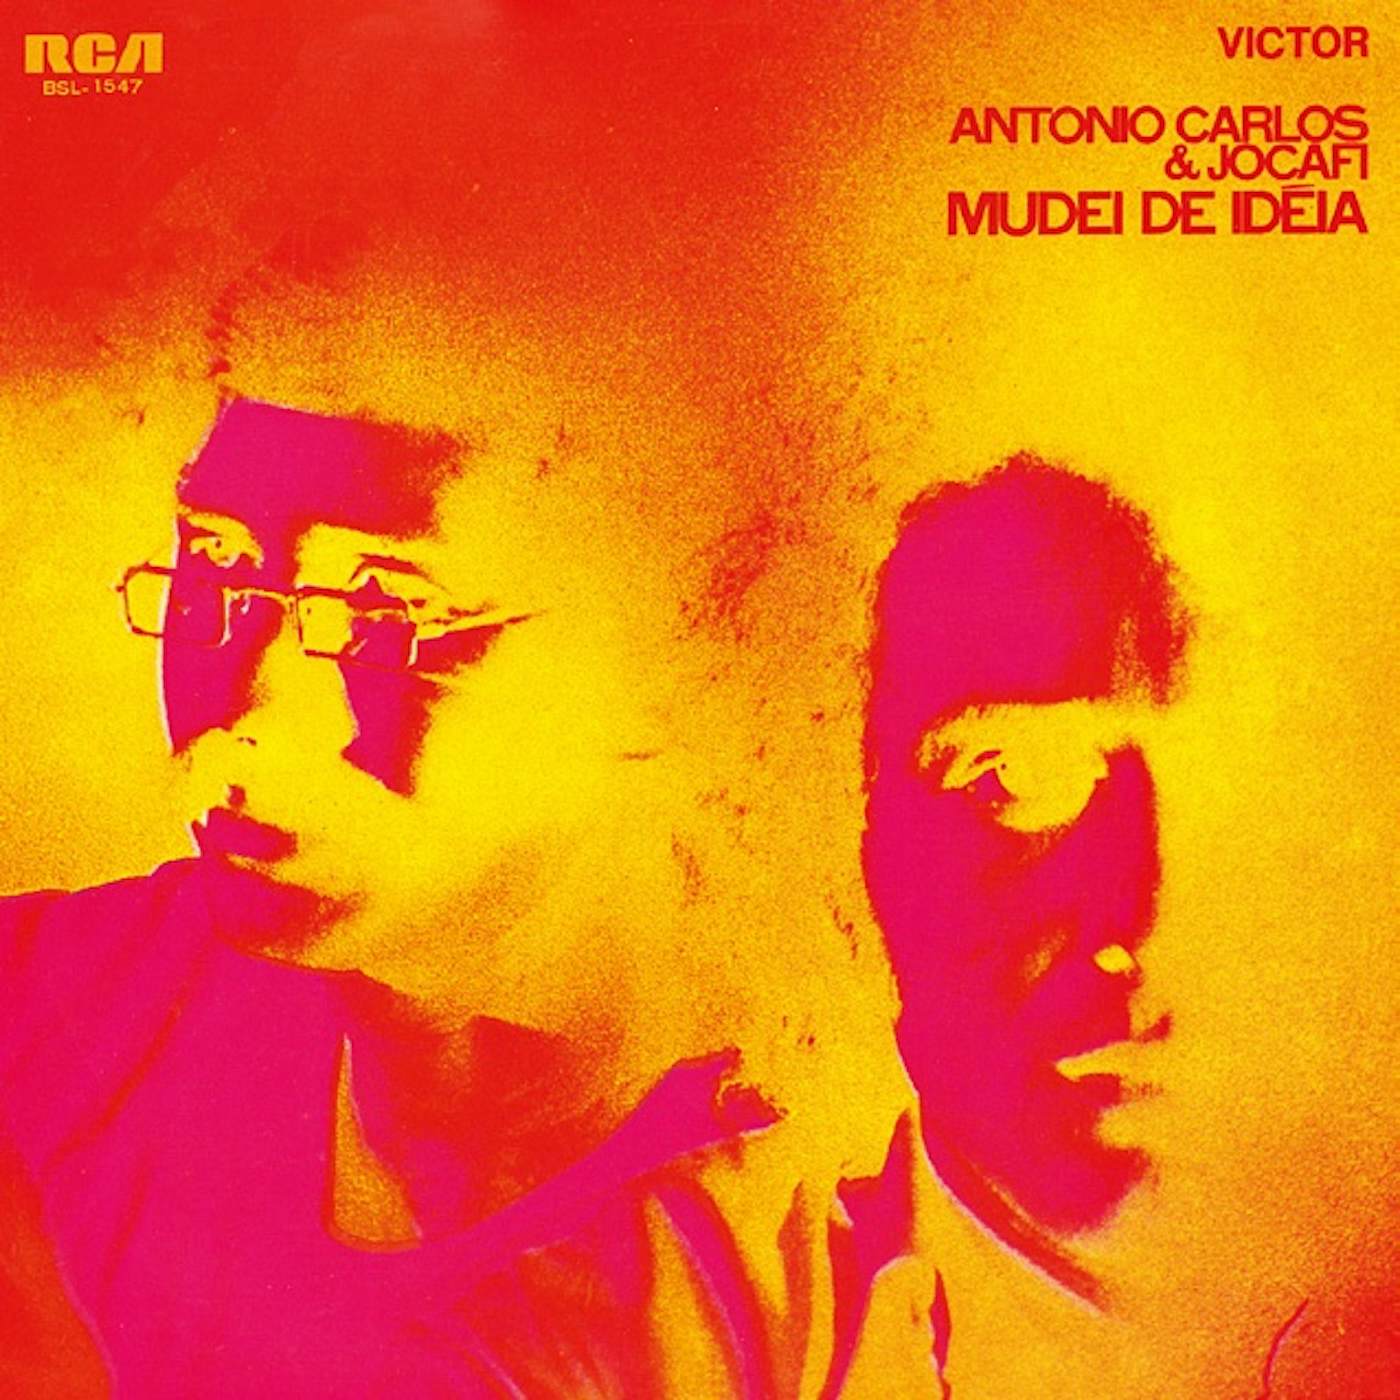 Antonio Carlos & Jocafi MUDEI DE IDEIA CD